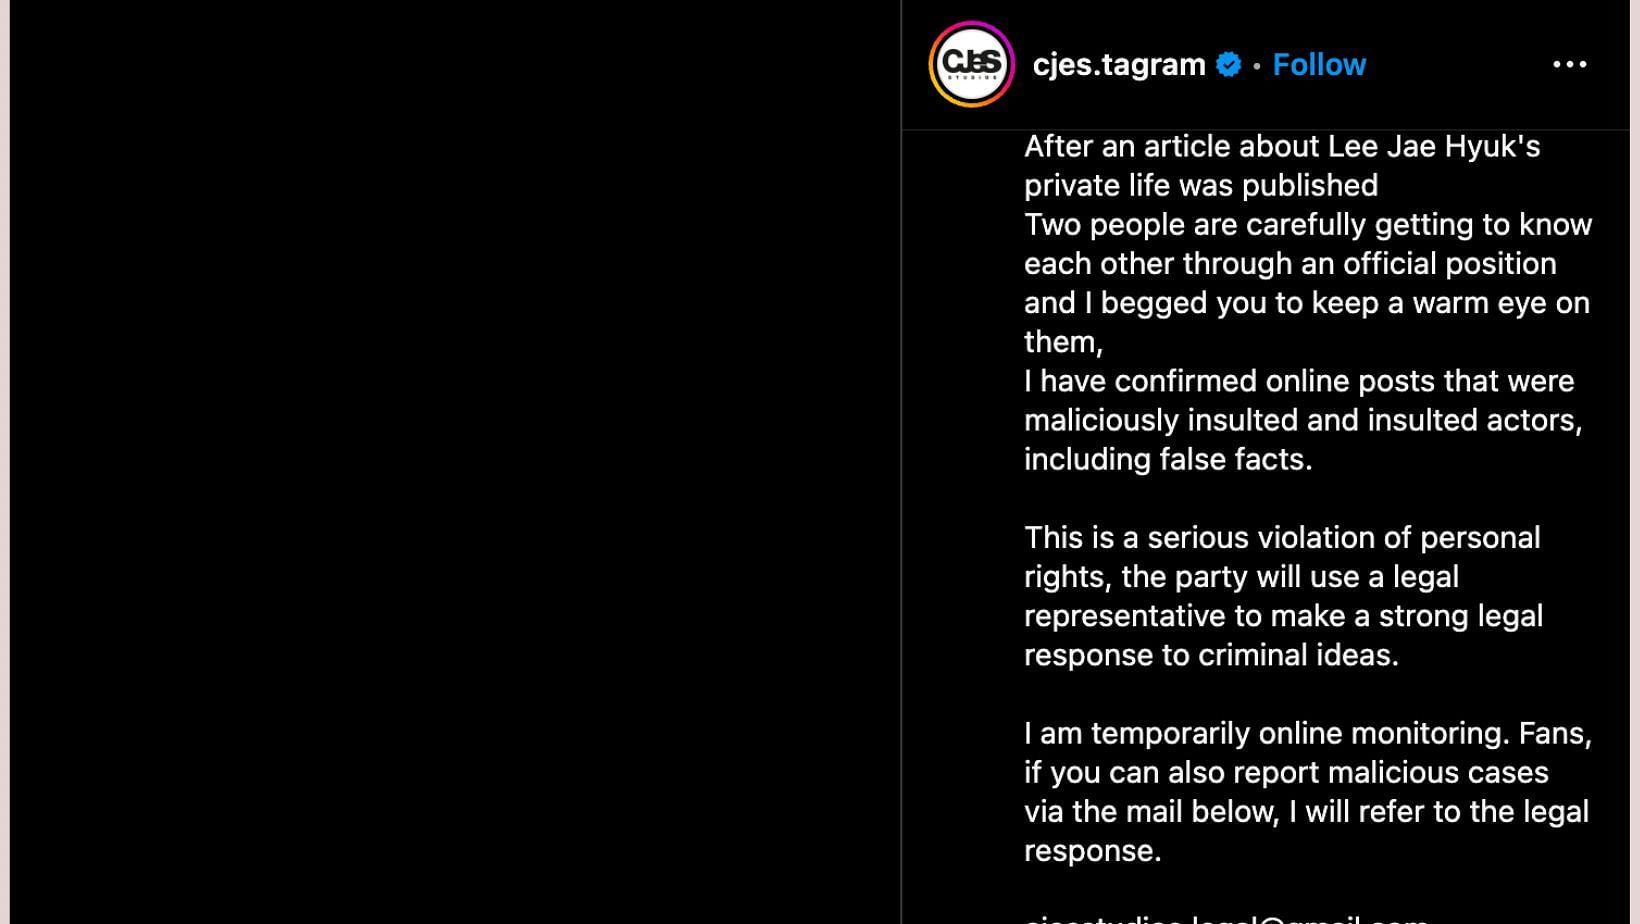 C-Jes Entertainment issues statement on Instagram to take legal action against perpetrators. (Image via Instagra/@ cjes.tagram &amp; translation via Google)